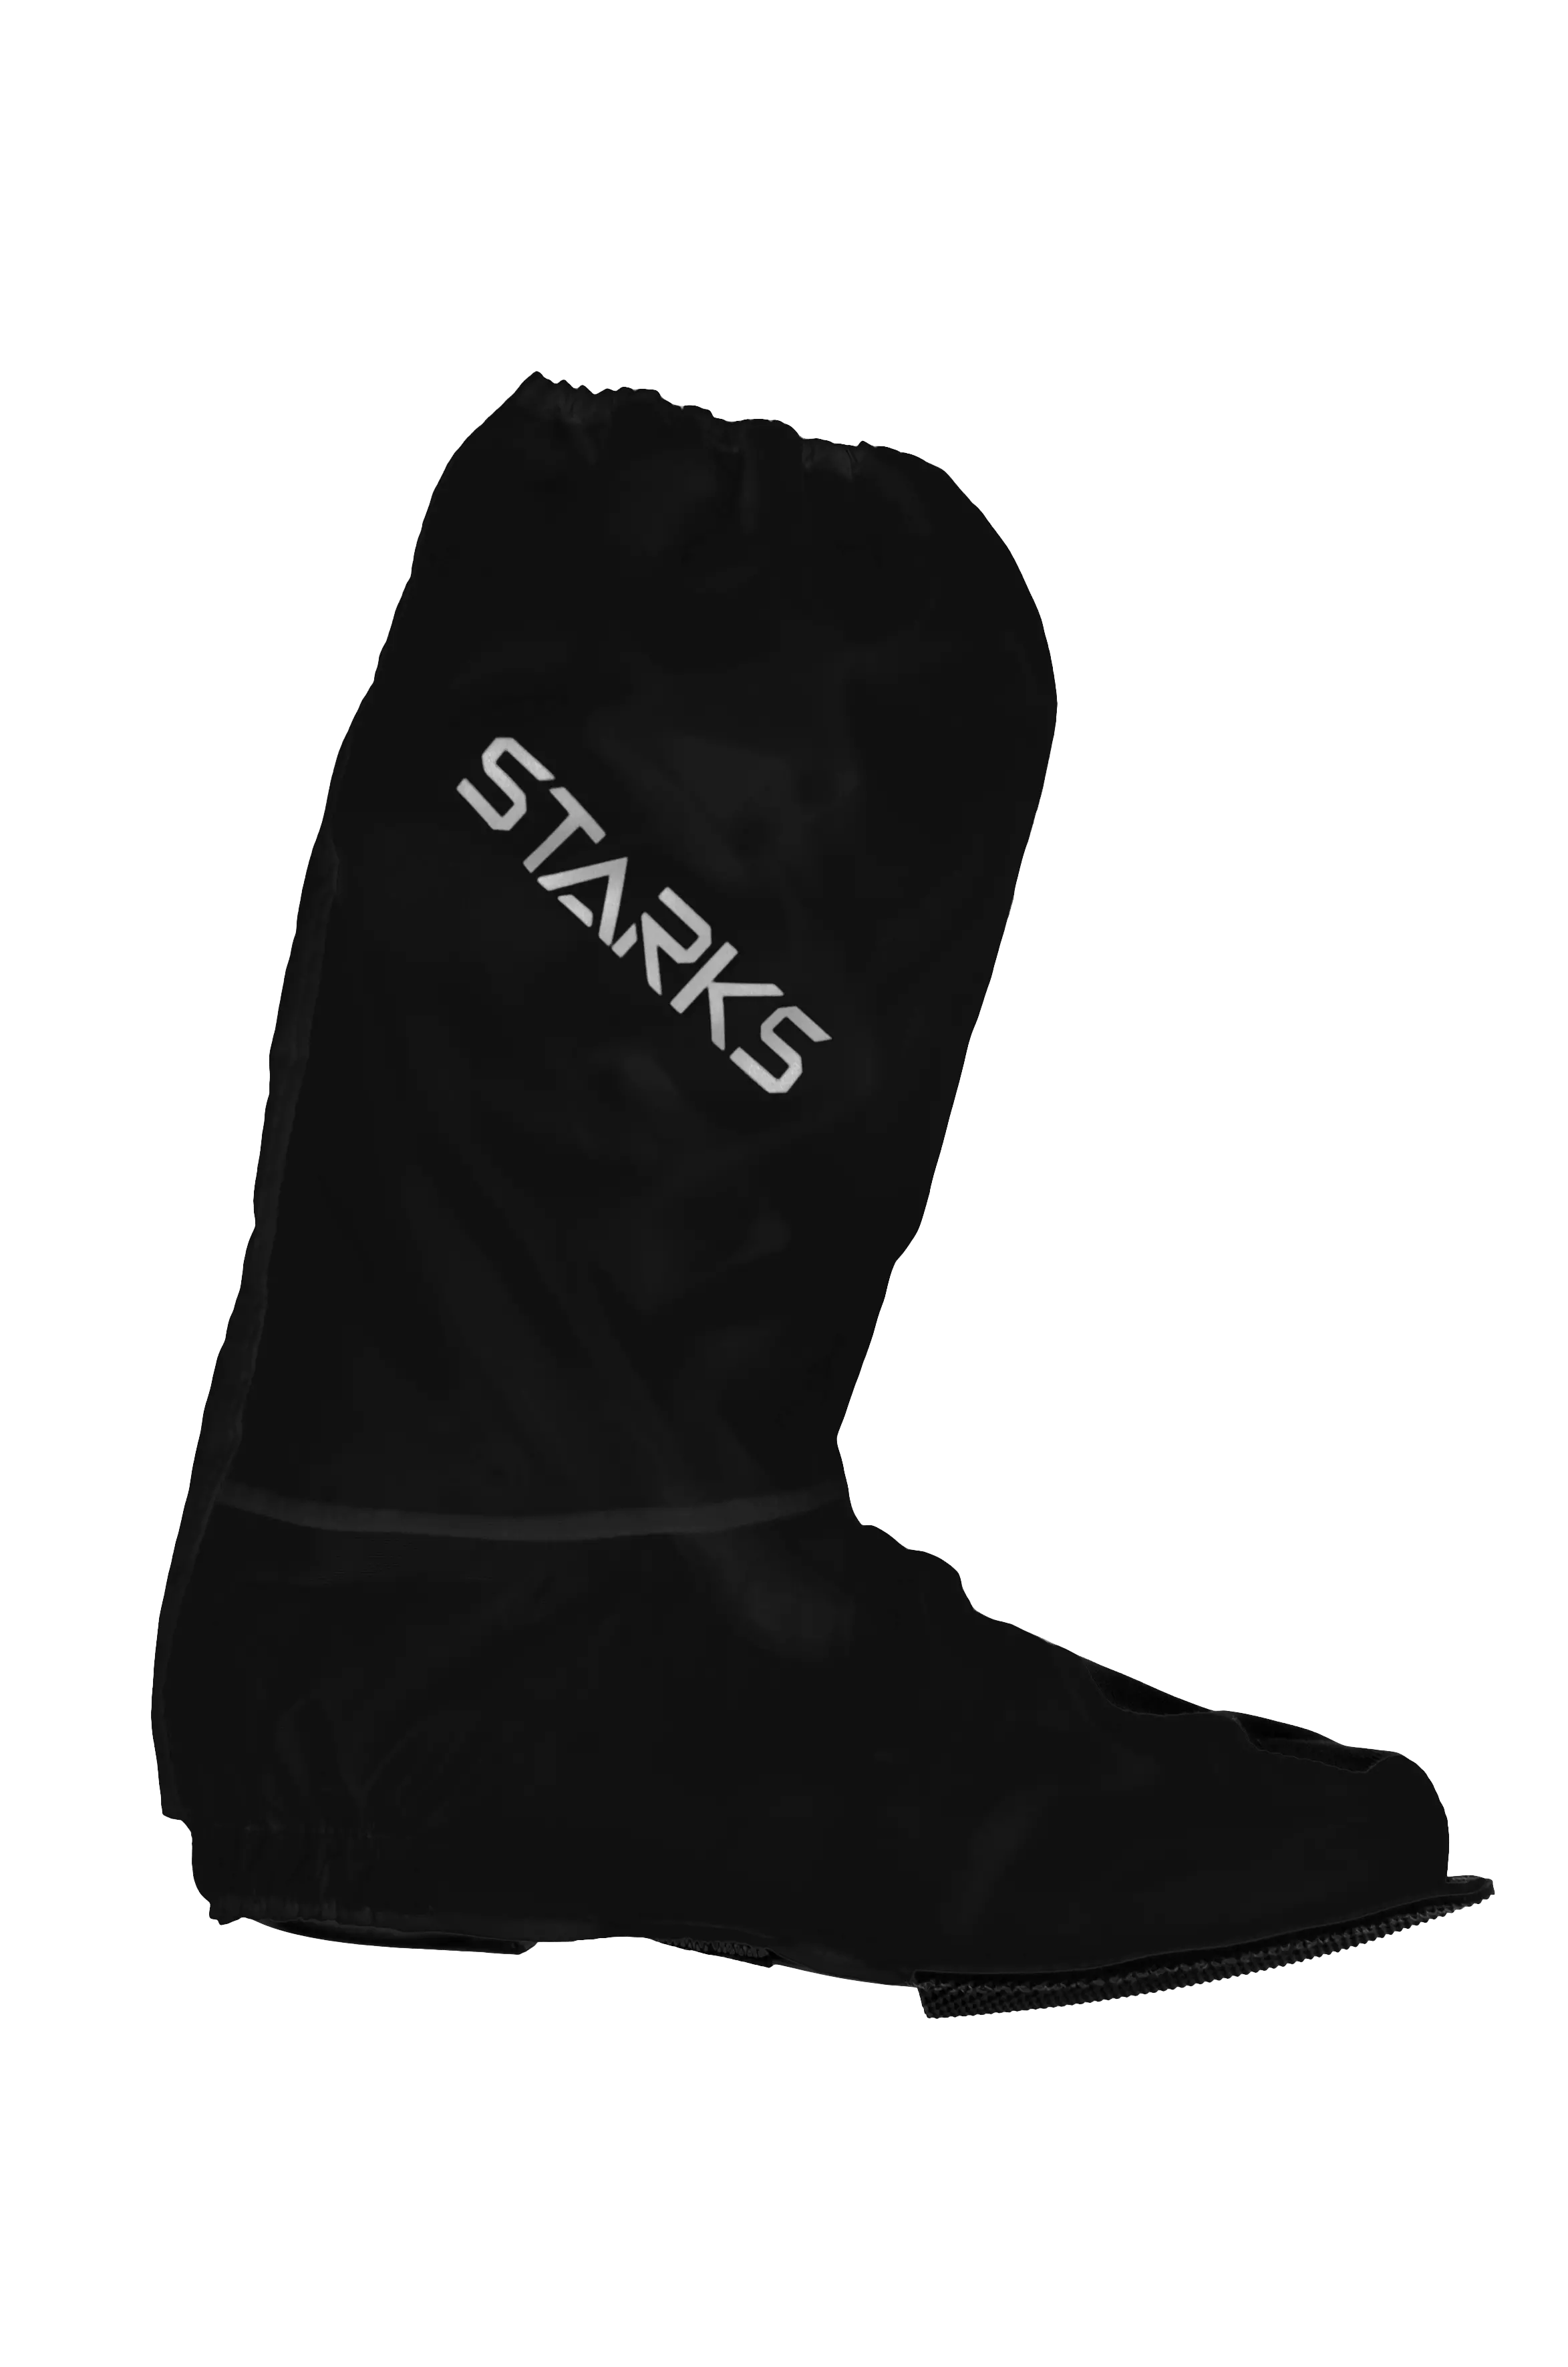 Starks Rain Boots бахилы черные